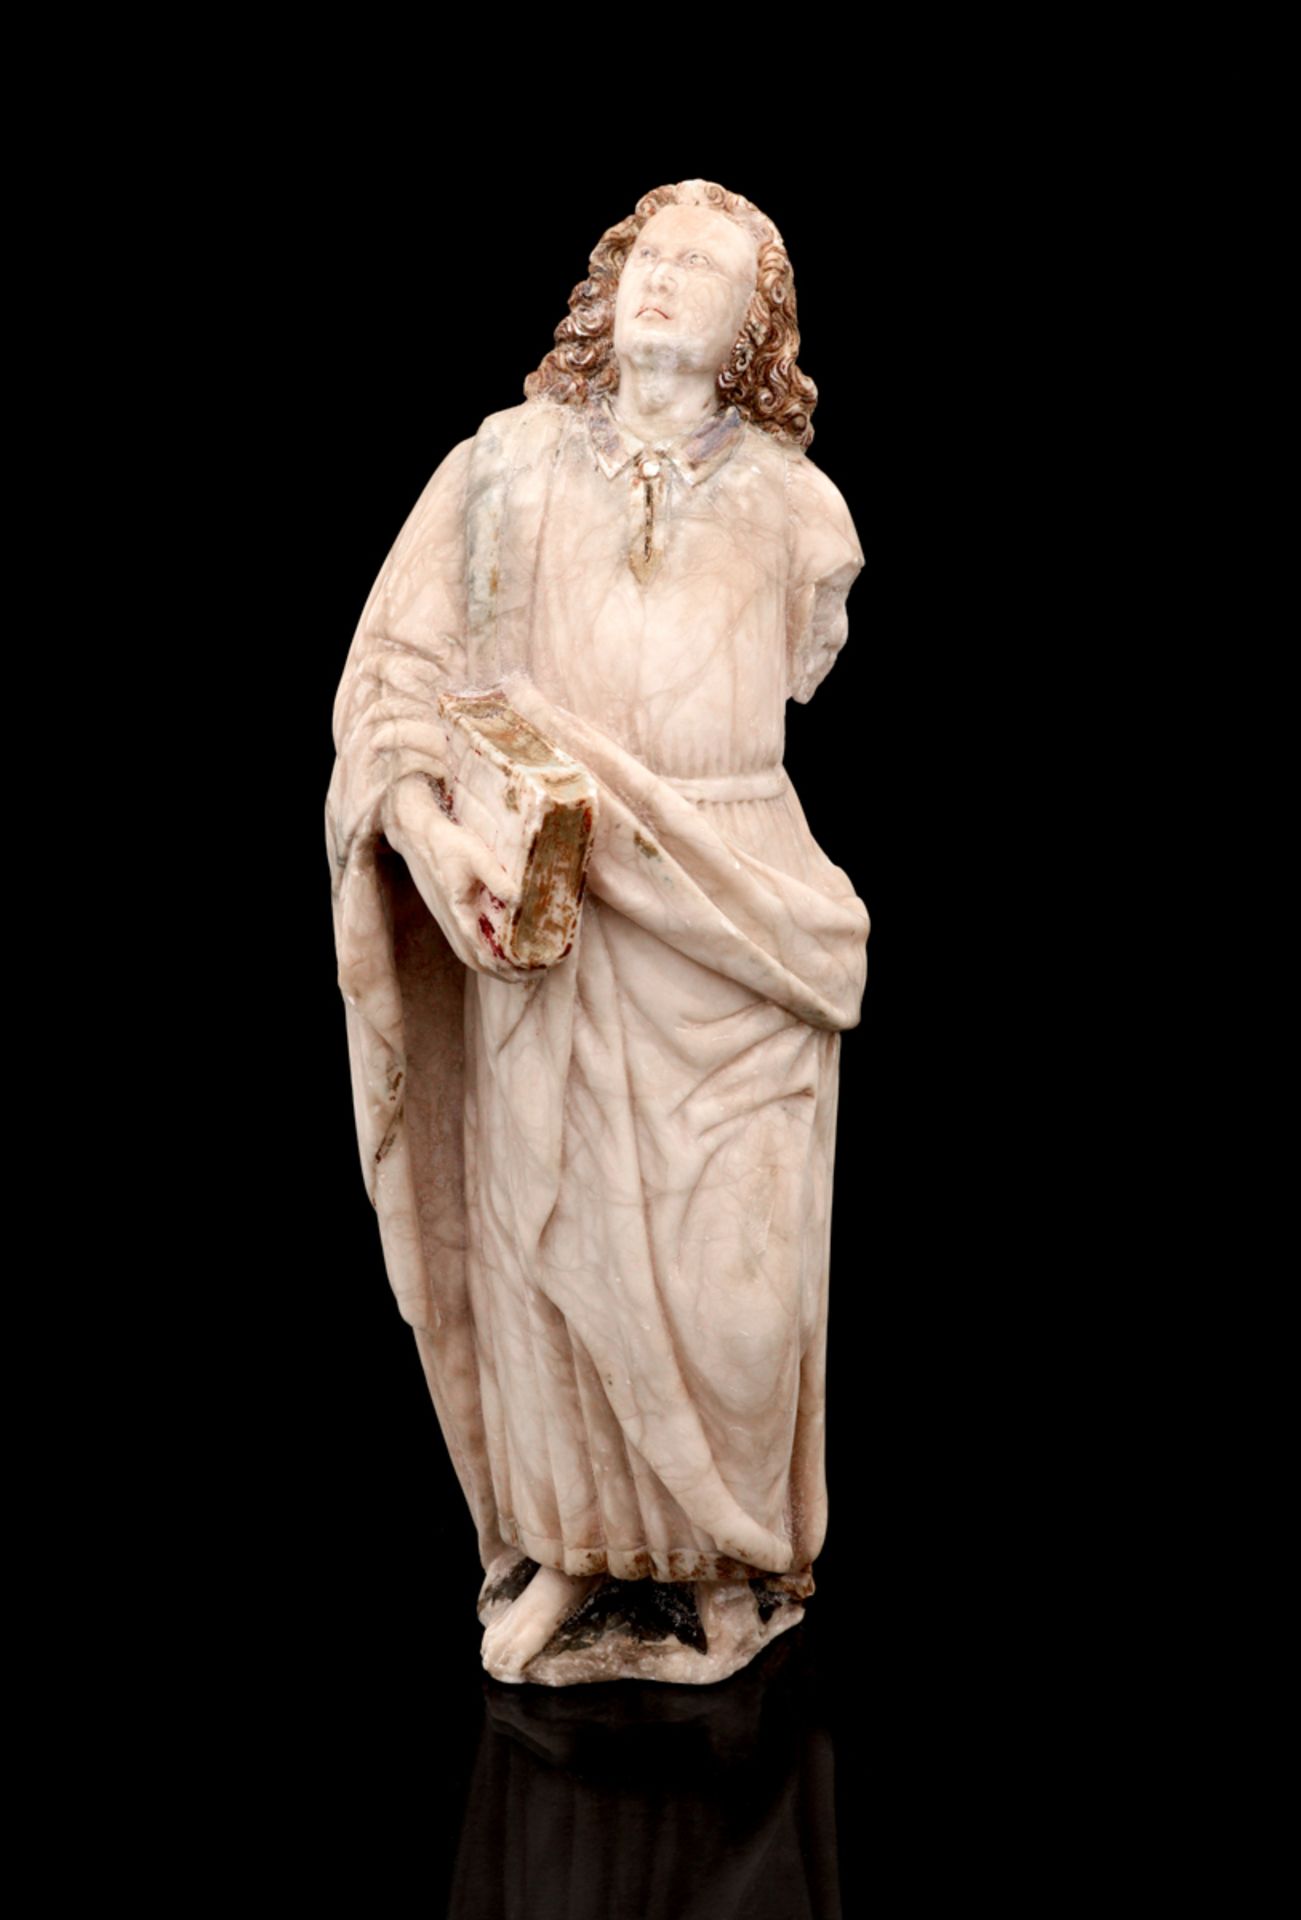 SAINT JOHN THE EVANGELIST, A 17TH CENTURY ALABASTER SCULPTURE Alabaster sculpture, traces of